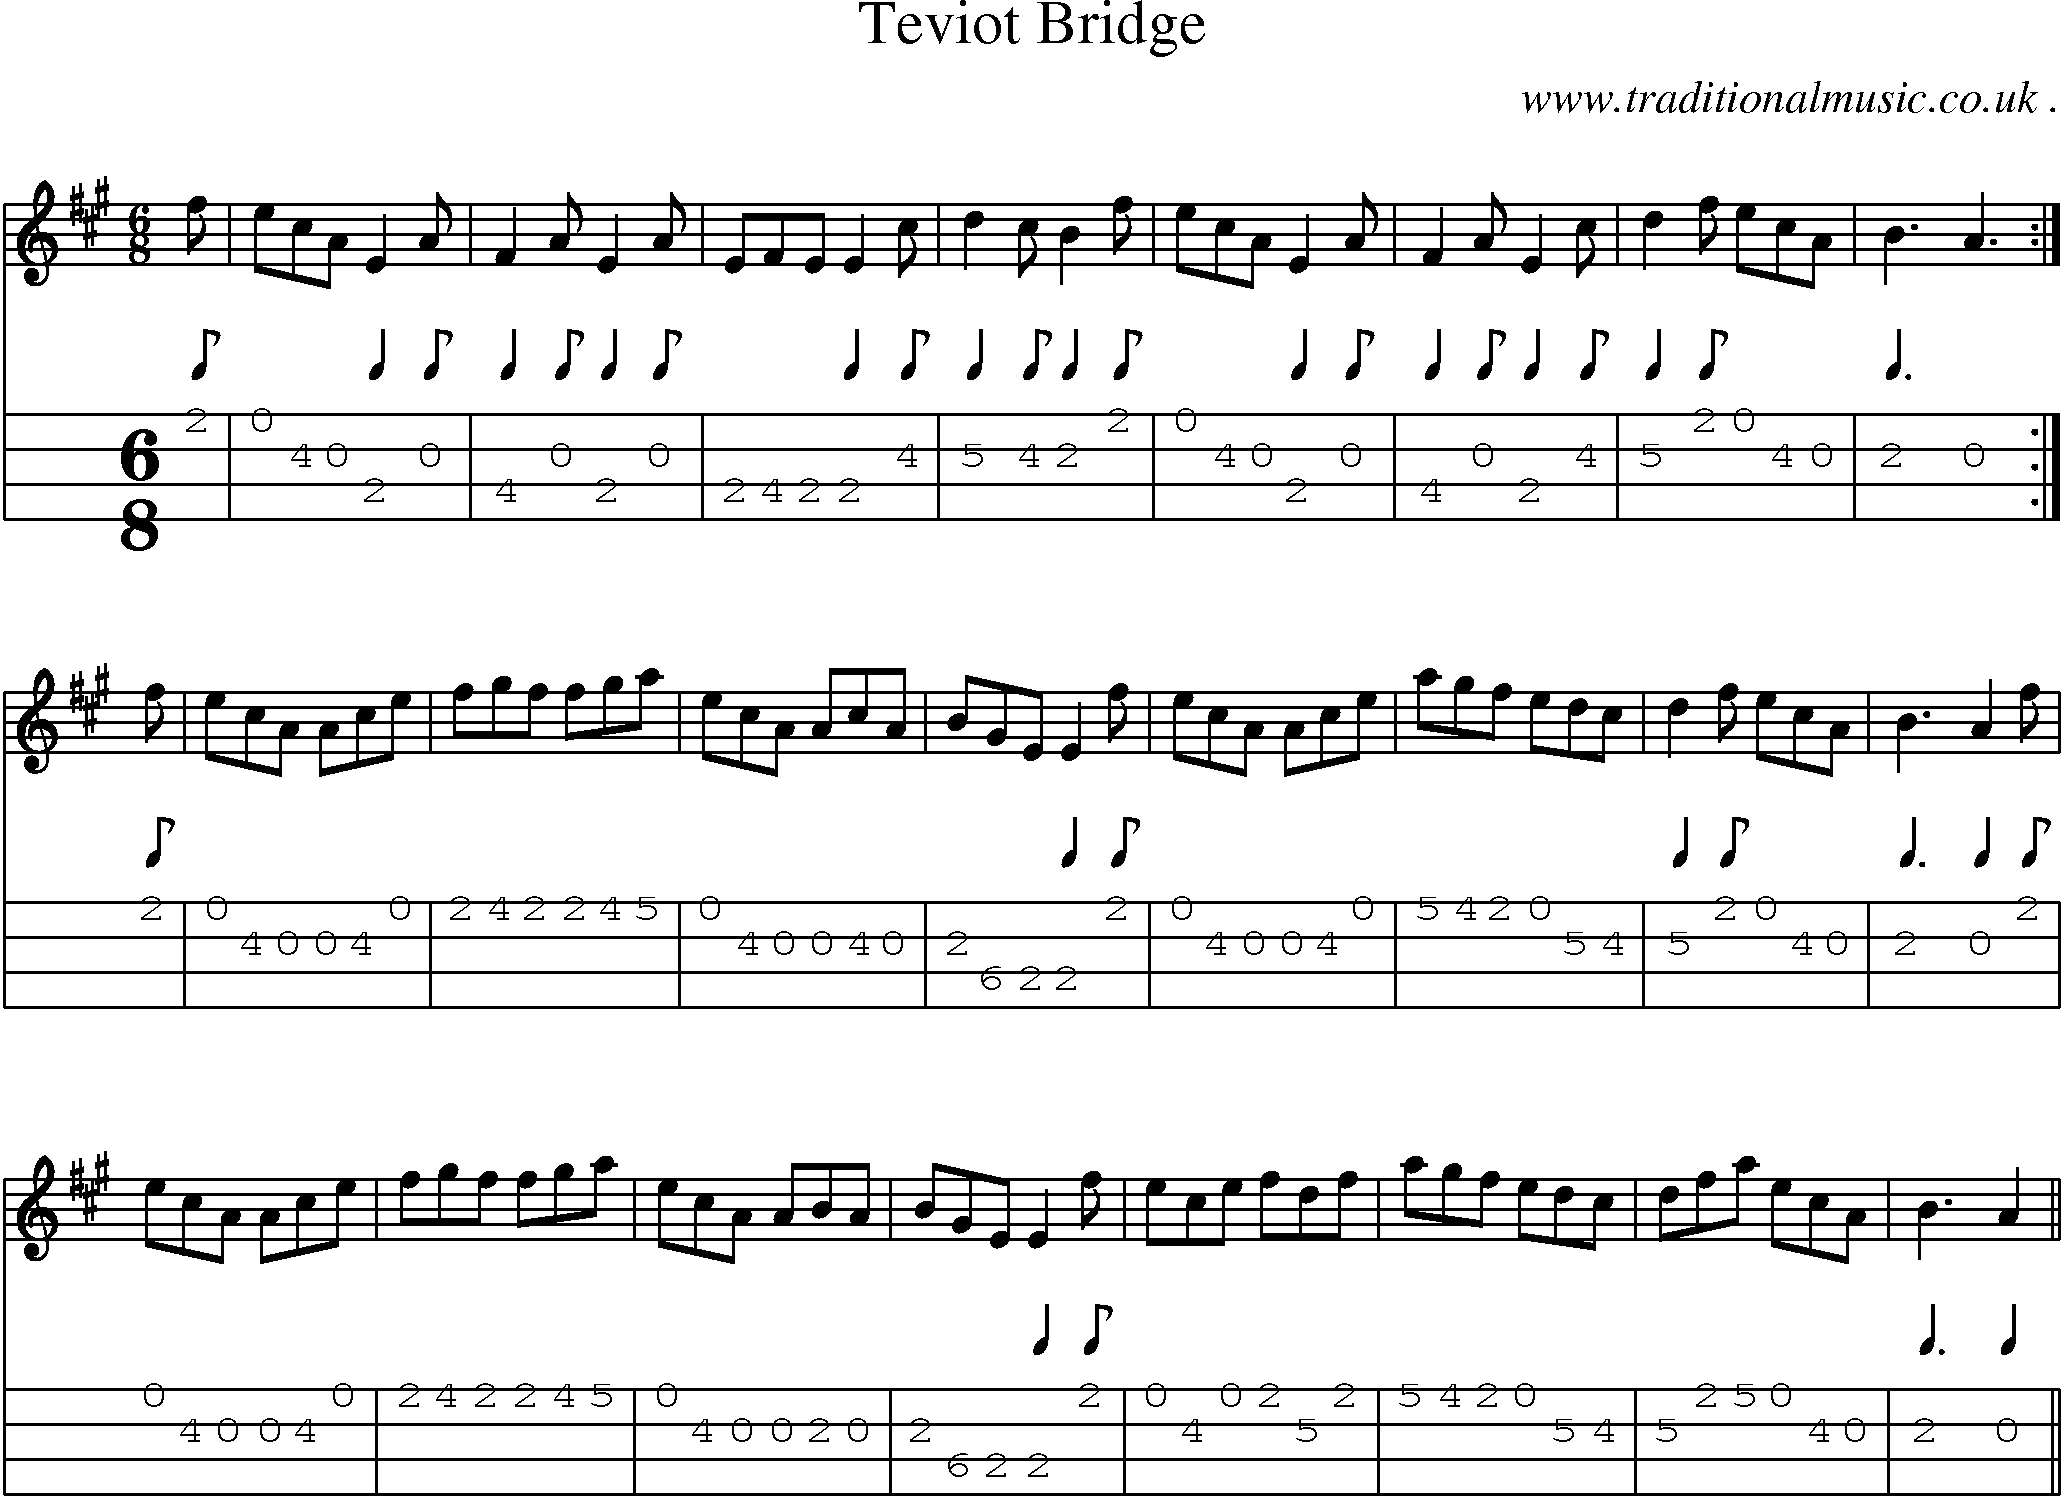 Sheet-music  score, Chords and Mandolin Tabs for Teviot Bridge